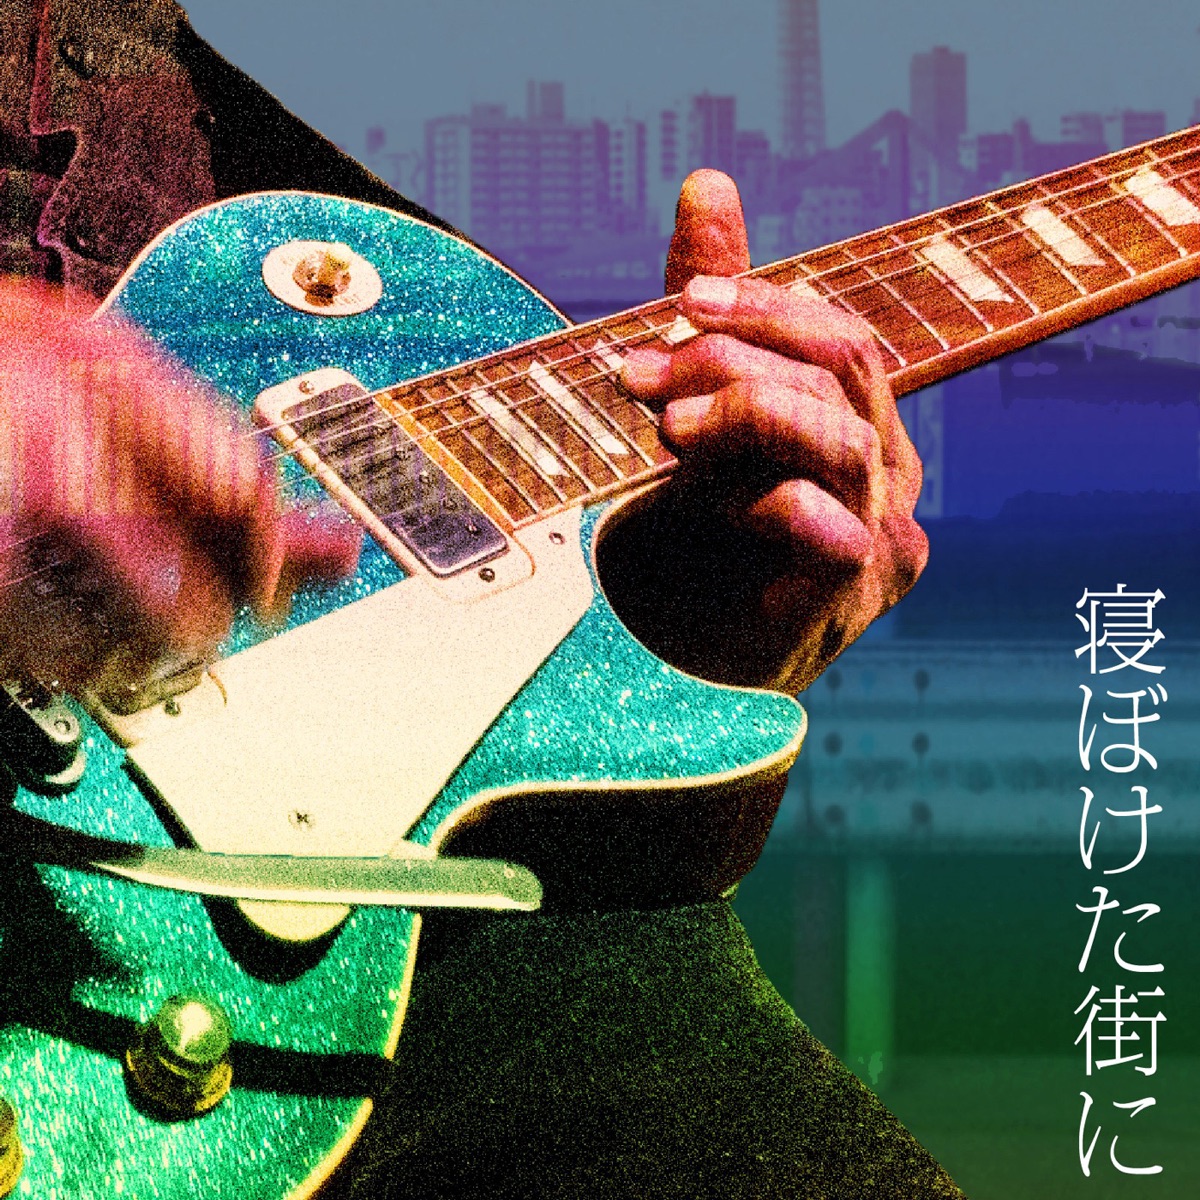 Cover for『Kazuyoshi Saito - Sleepy City』from the release『Sleepy City - Neboketamachini』